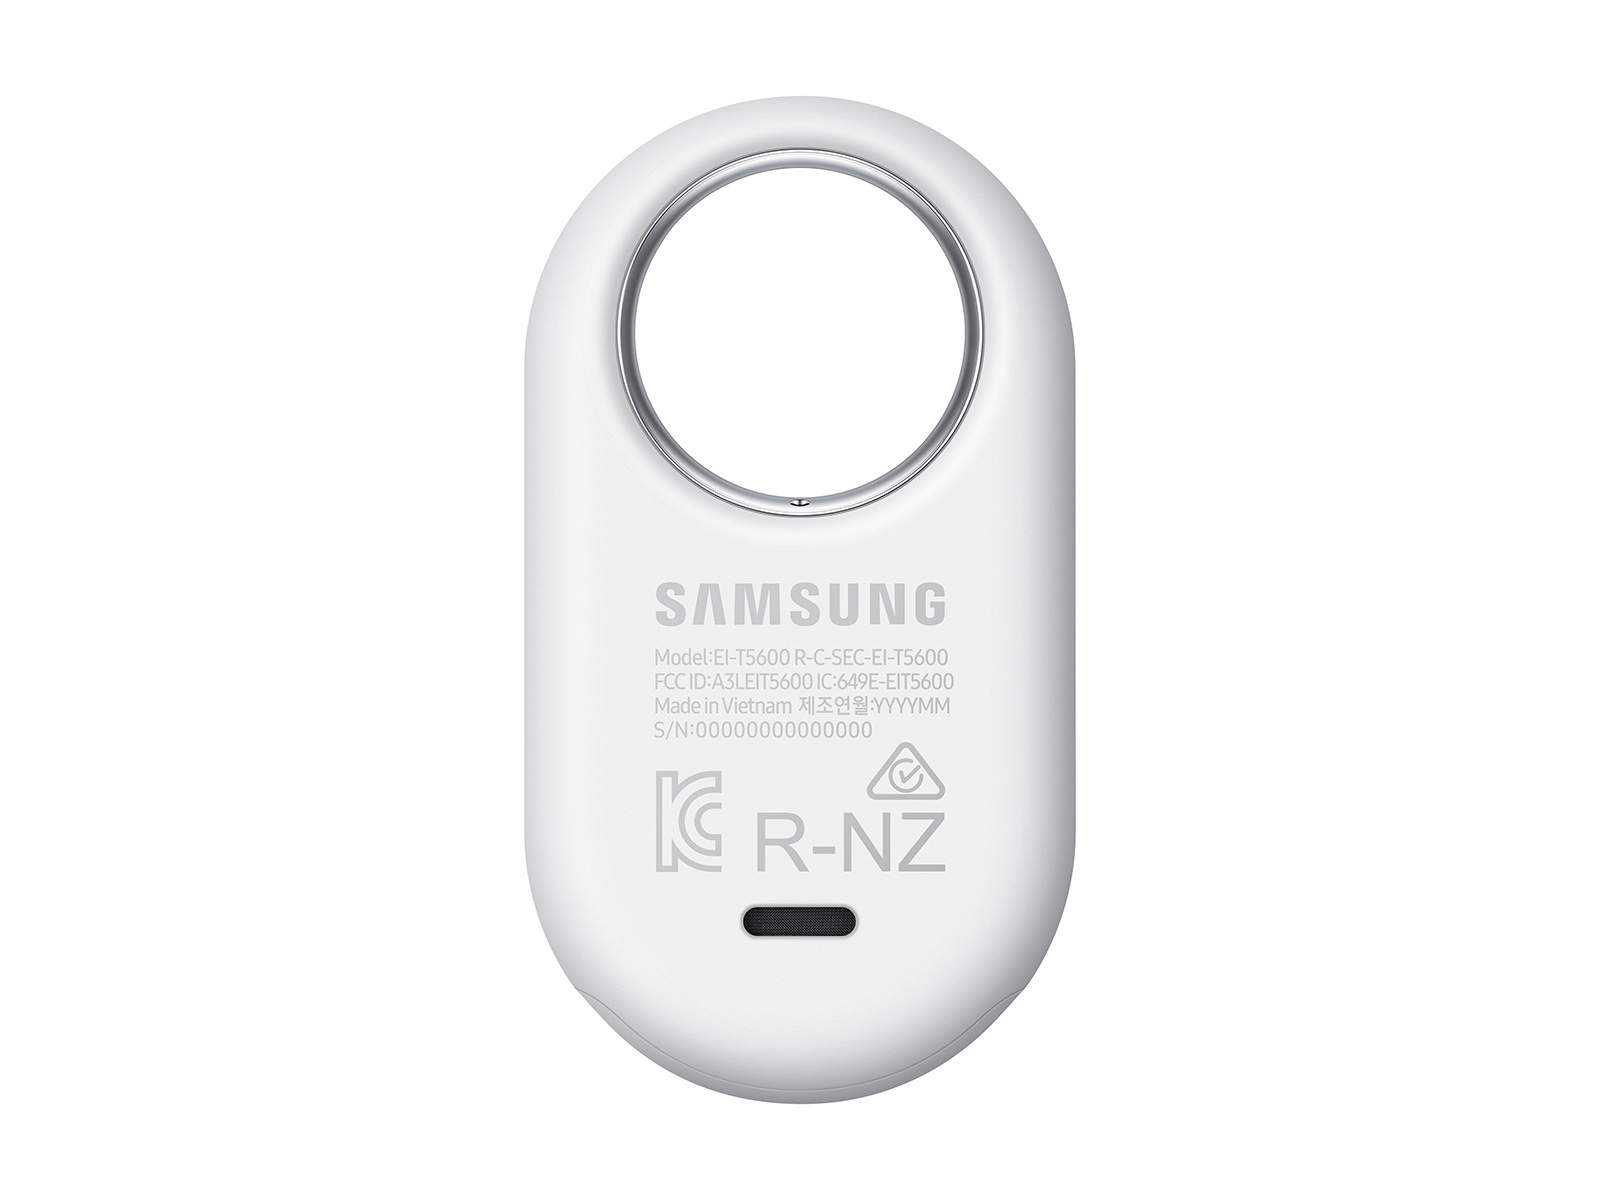 Samsung Galaxy SmartTag2 Black and White EI-T5600KWEGUS - Best Buy